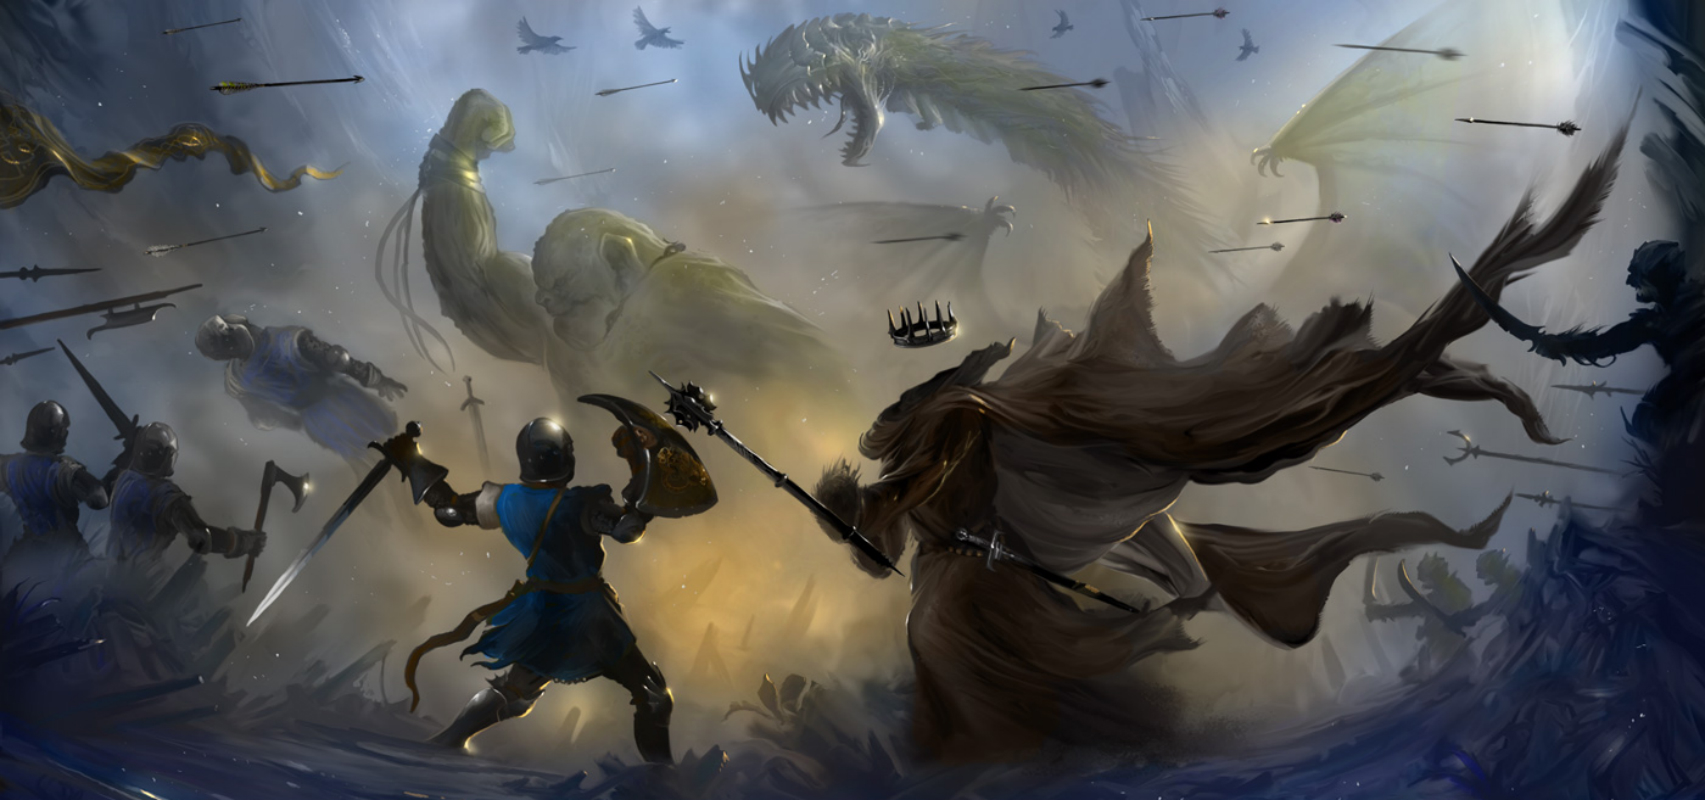 Fantasy battle desktop wallpaper